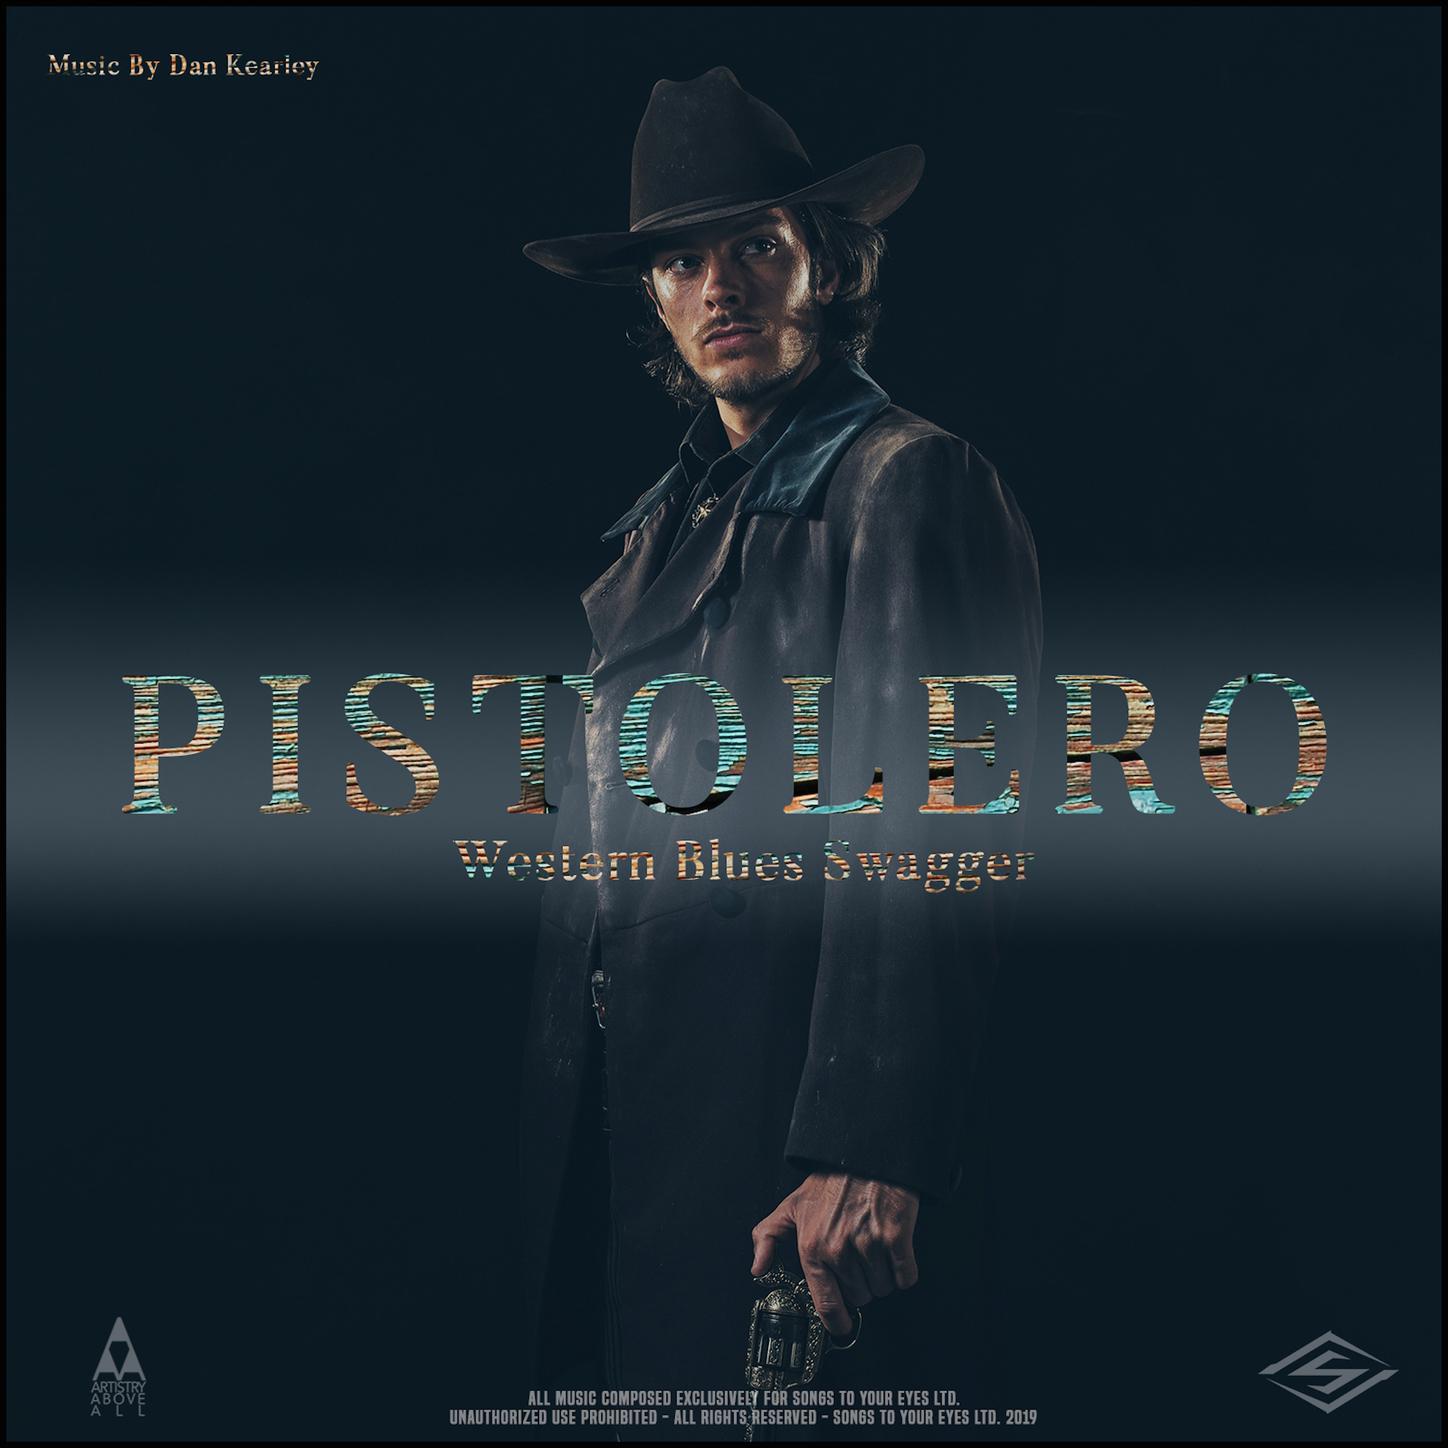 Pistolero: Rustic Western Blues Swagger